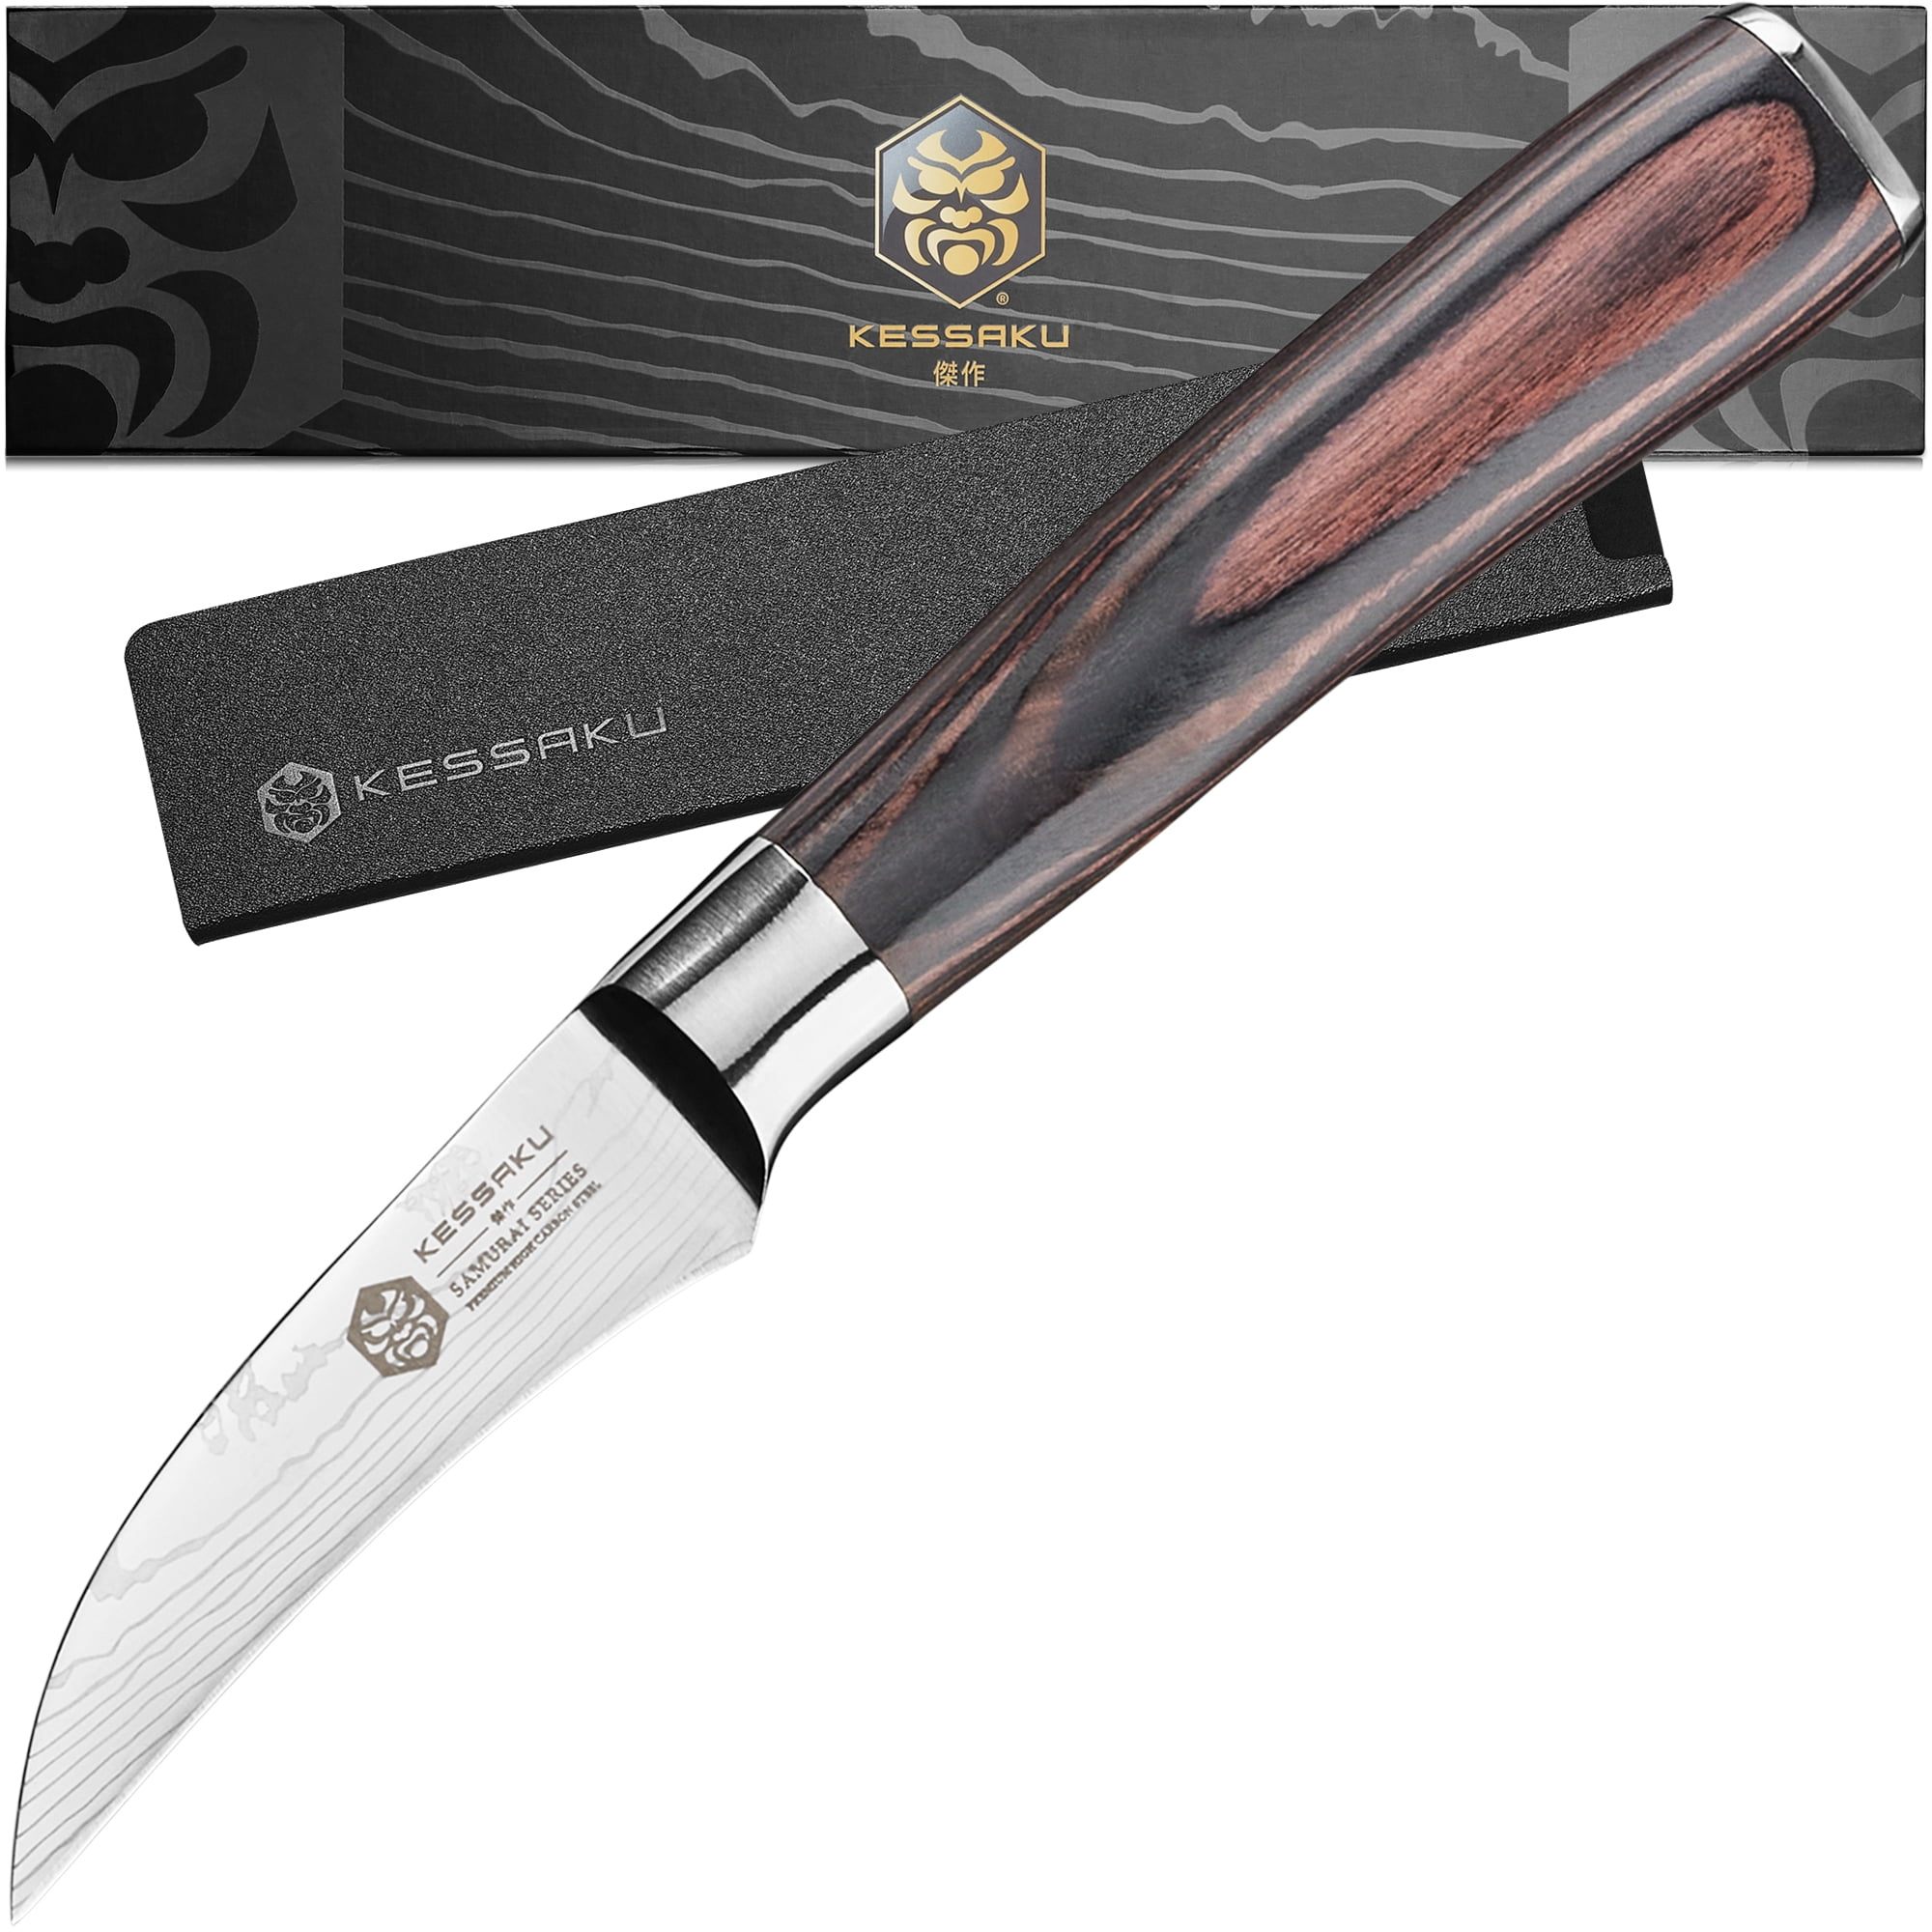 Kessaku Tourne Peeling Paring Knife - 2.75 inch Bird's Beak - Samurai  Series - Razor Sharp - Forged 7Cr17MoV High Carbon Stainless Steel - Wood  Handle with Blade Guard 